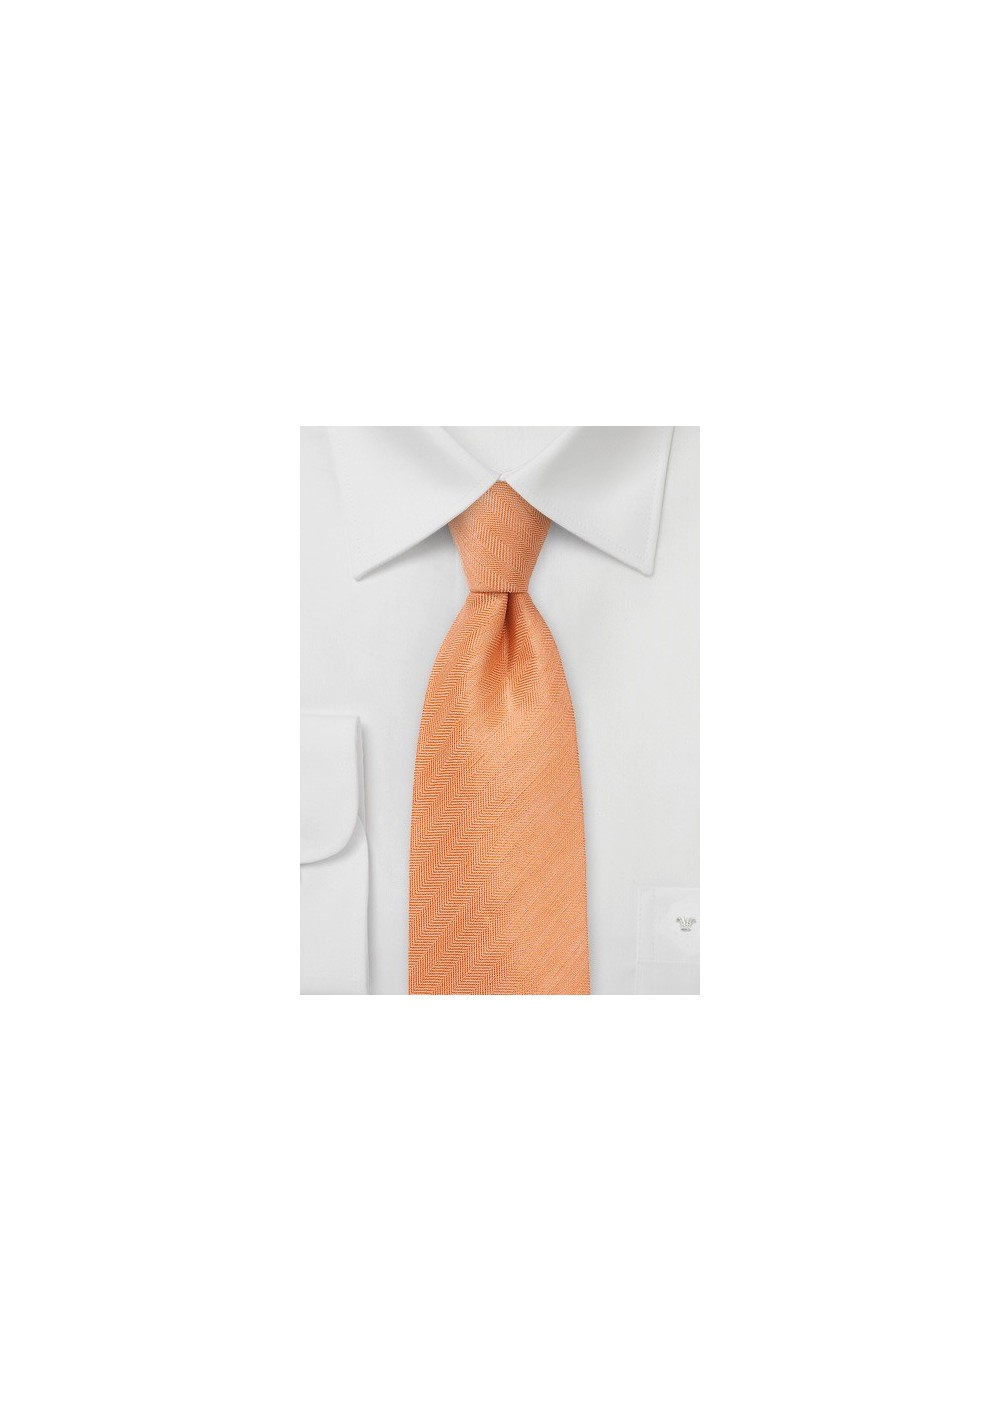 Men's Herringbone Tie in Tangerine